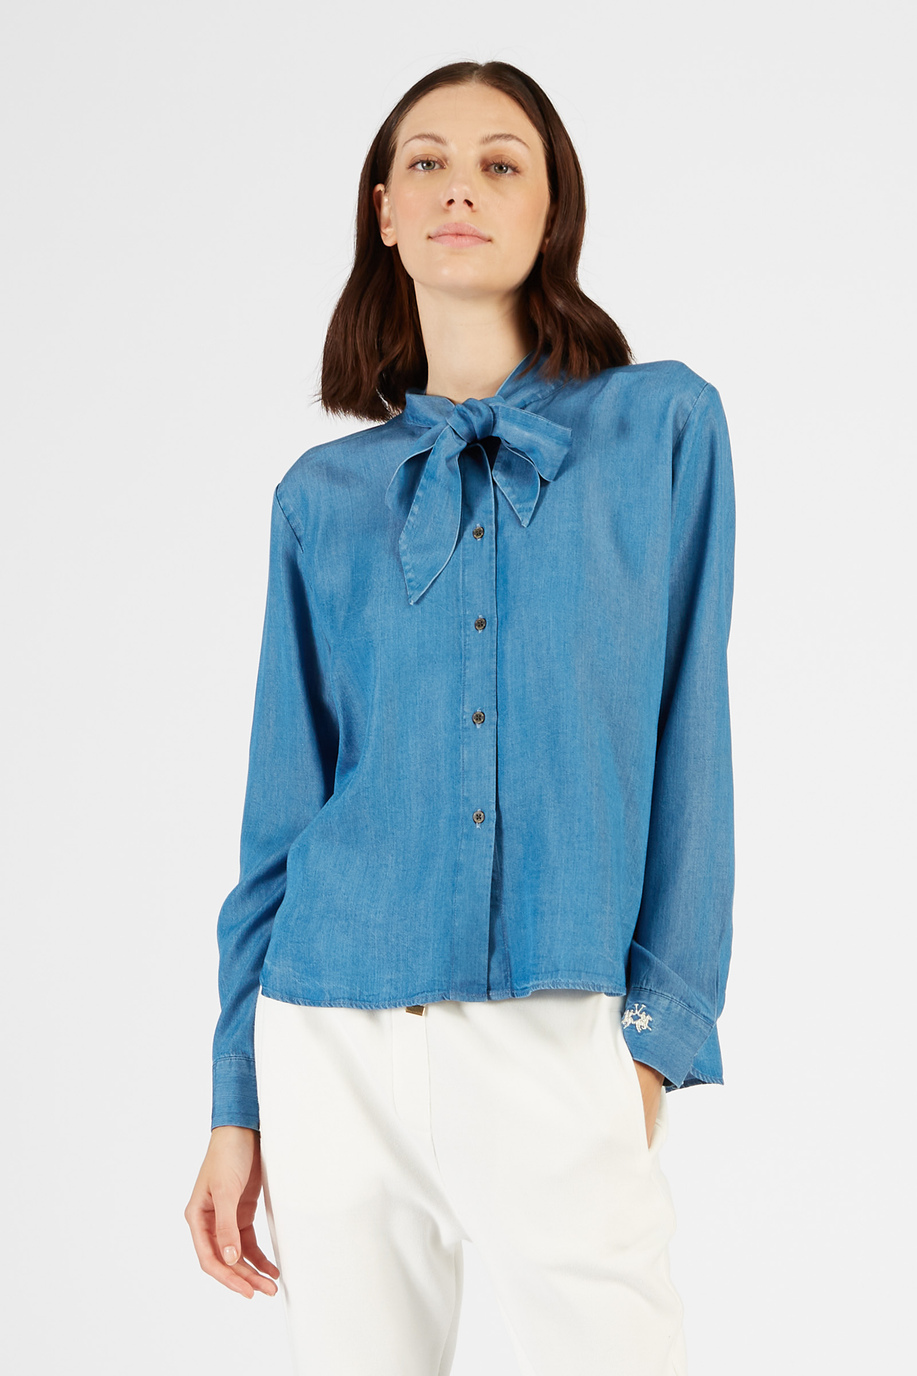 Argentina women’s shirt in lyocell regular fit long sleeves - Shirts | La Martina - Official Online Shop